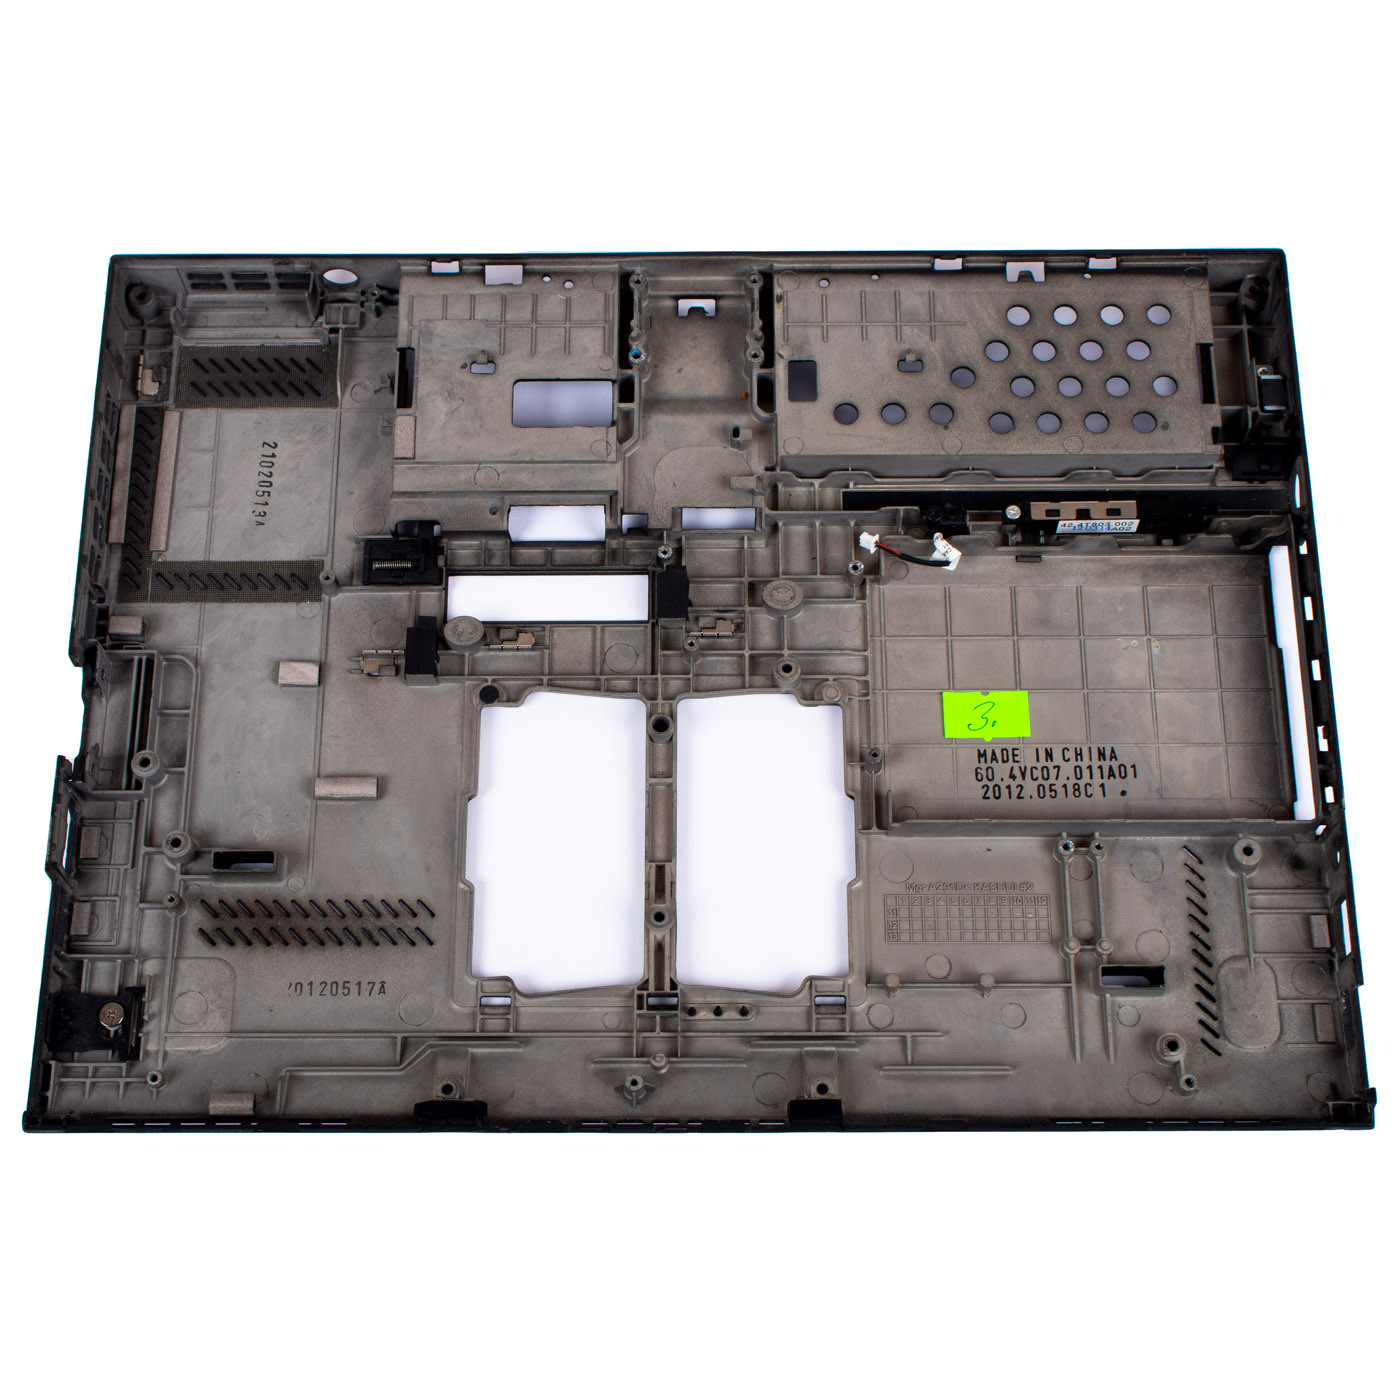 Base cover Lenovo ThinkPad X220T 04W2077 60.4J03